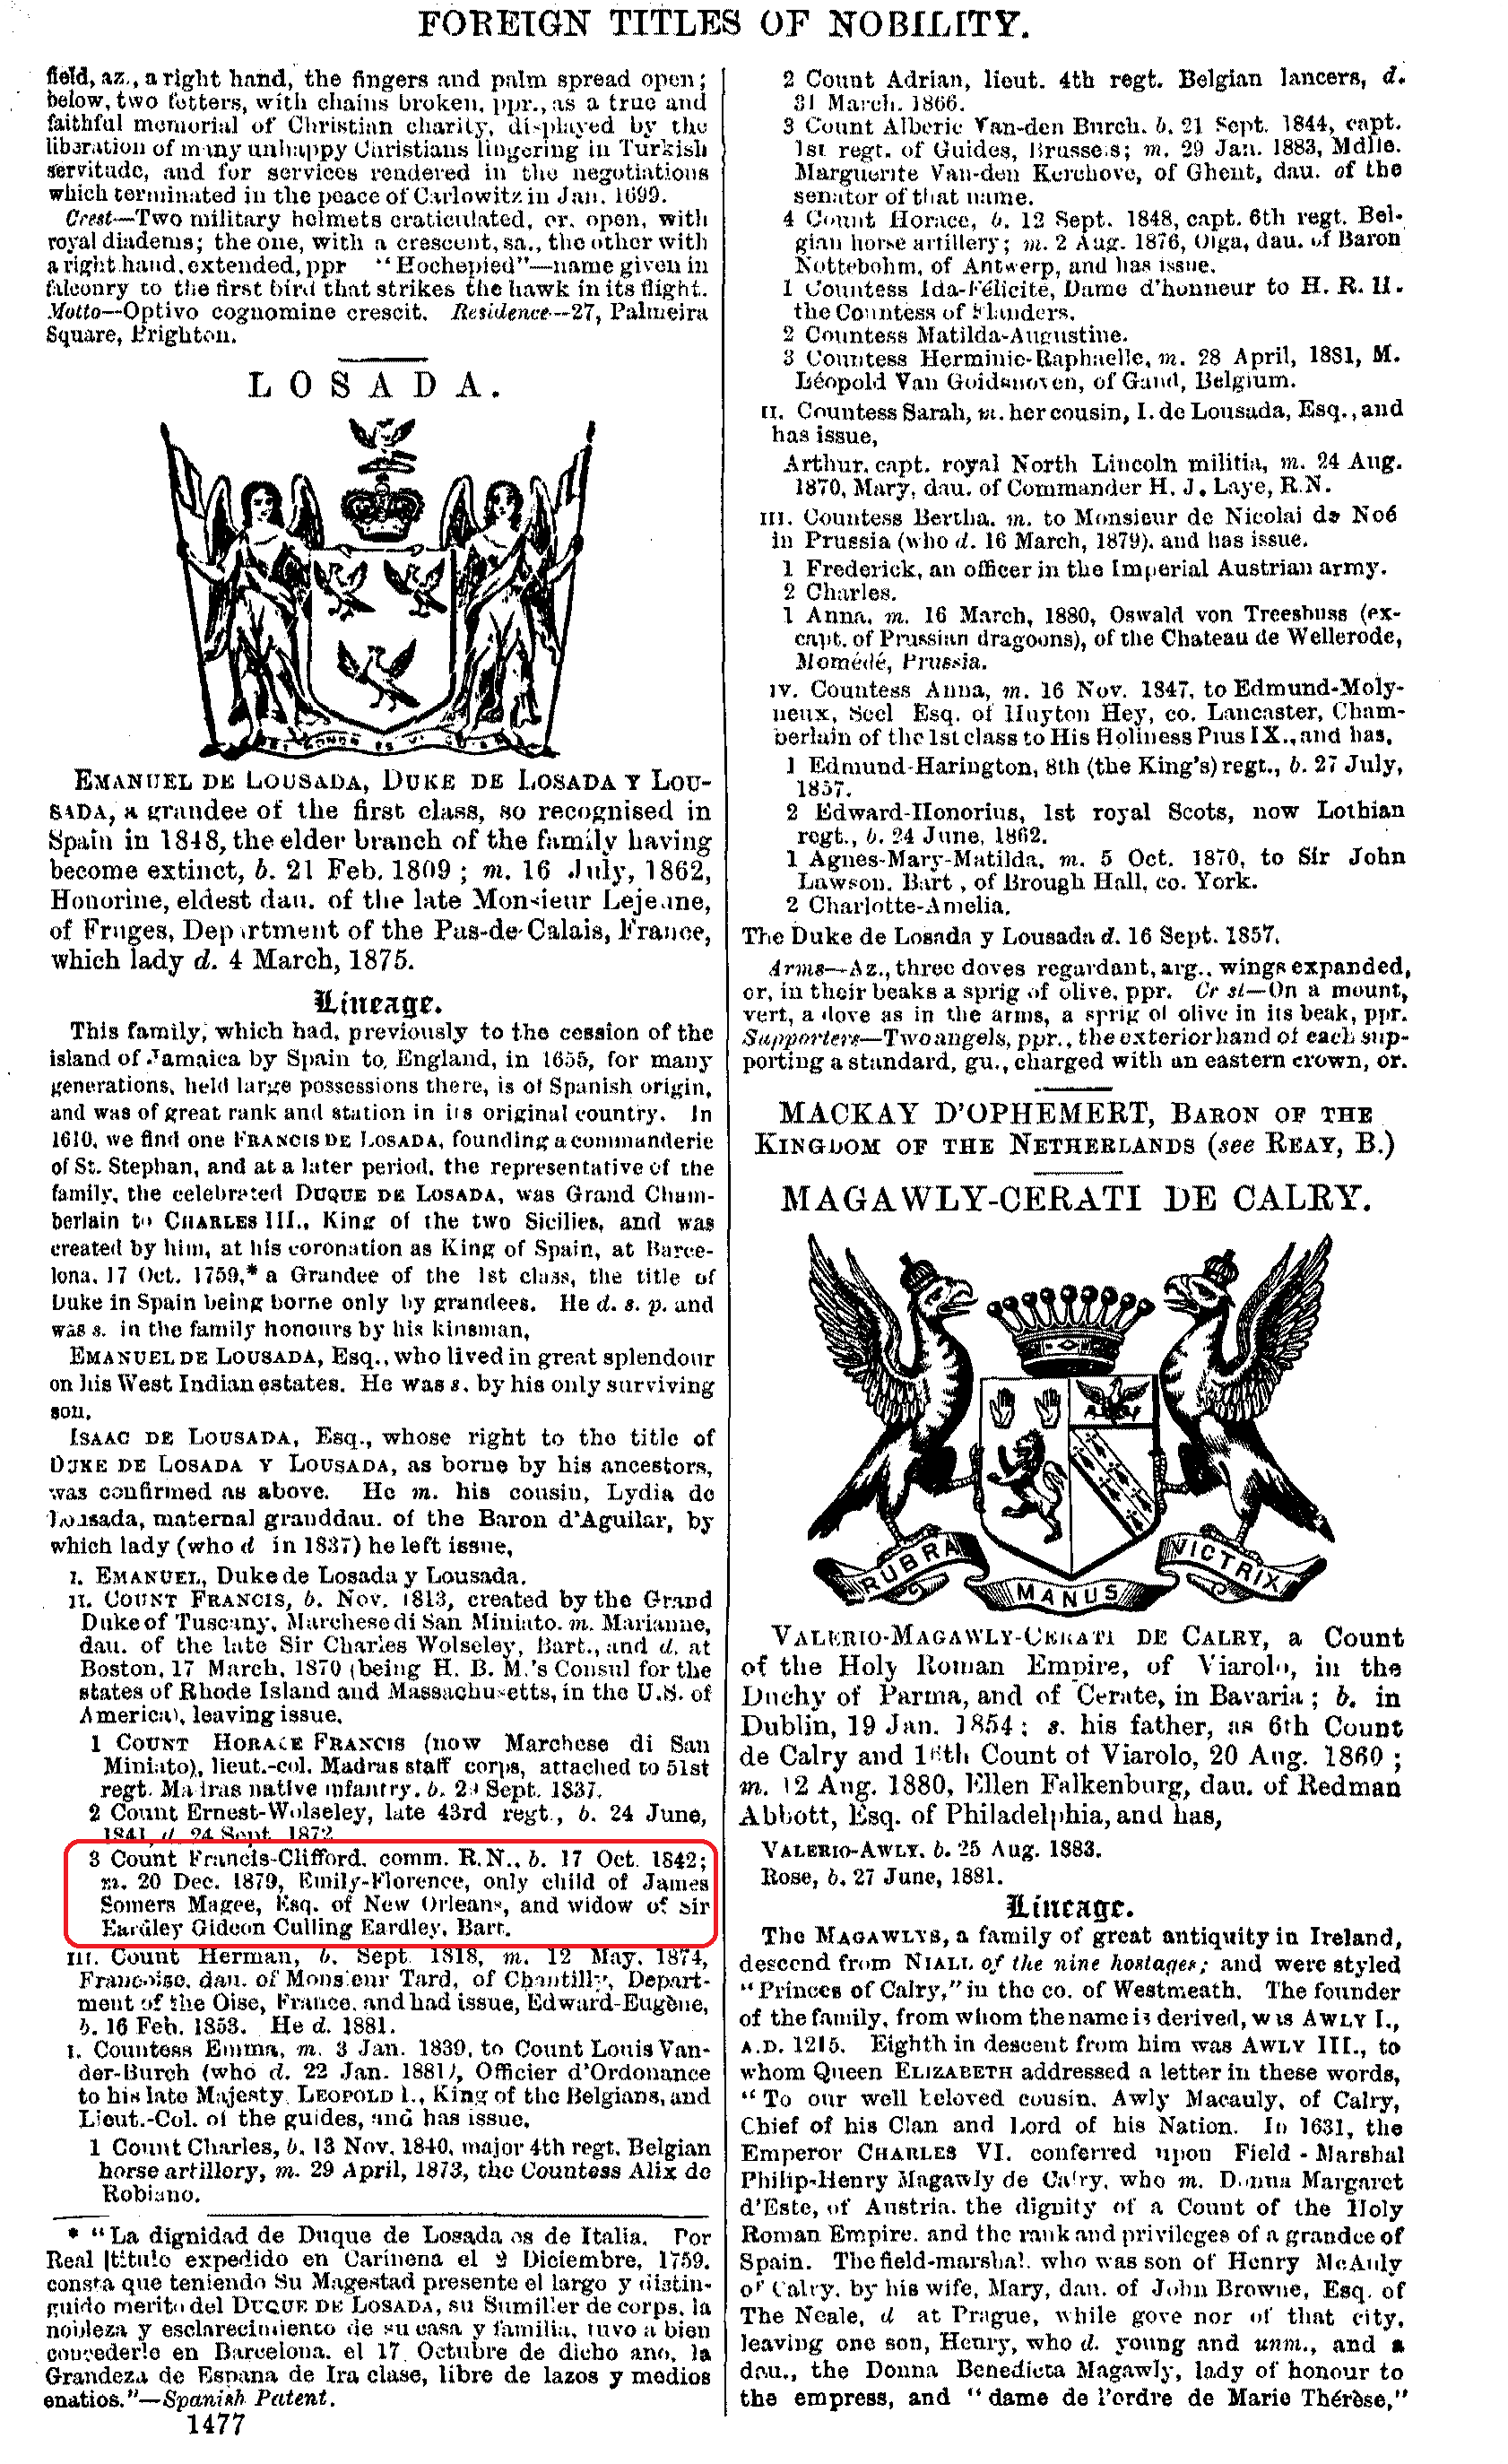 Burke’s Dictionary of Peerage & Baronetage 1885 on TheGenealogist